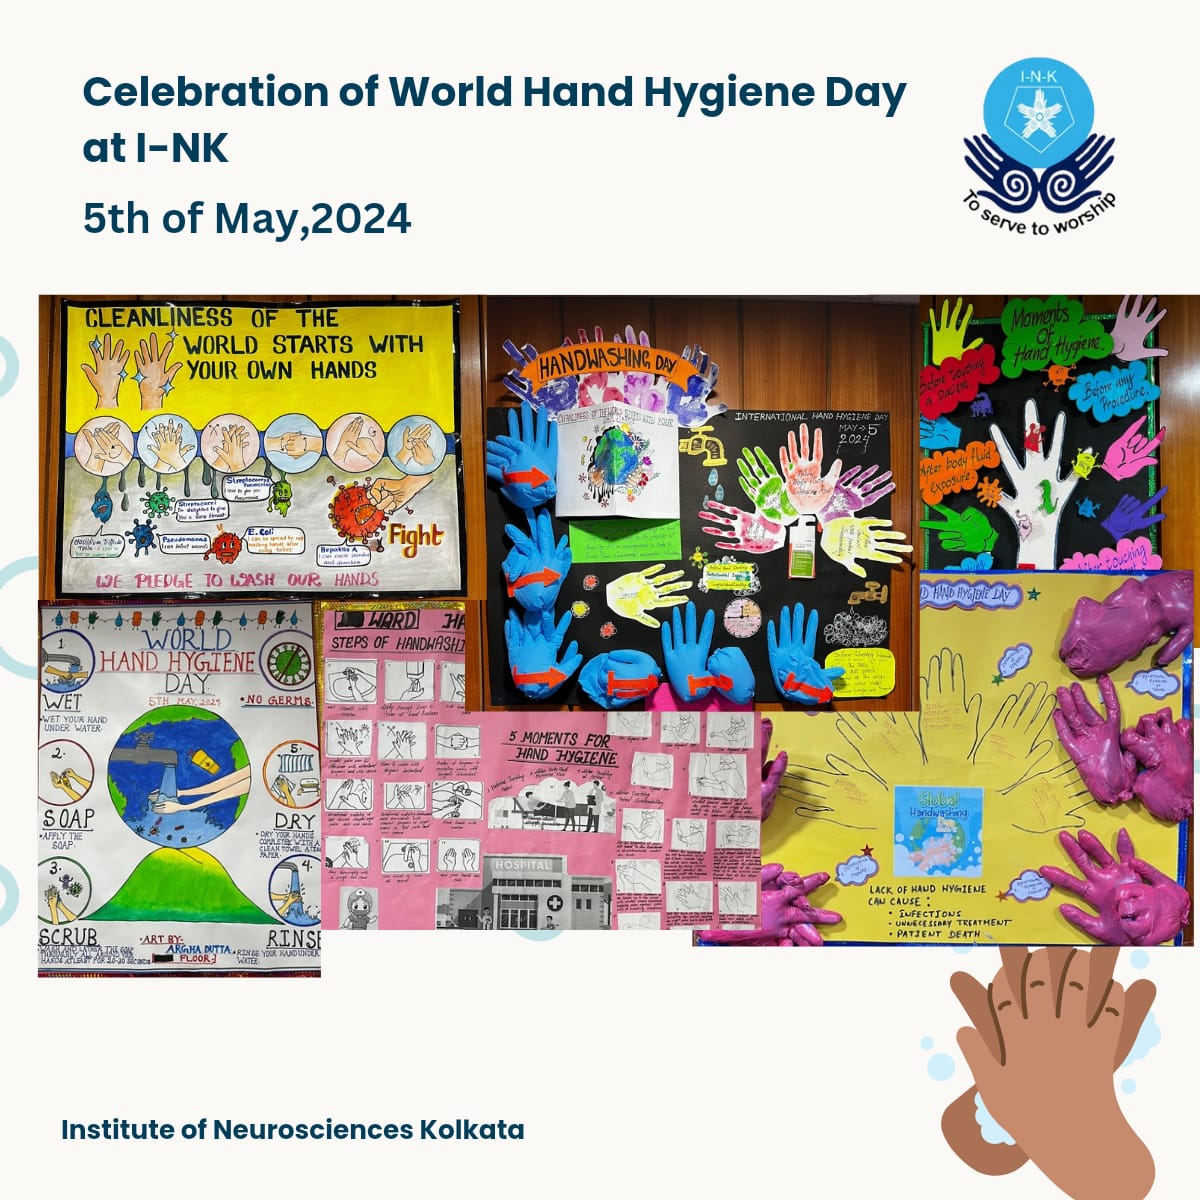 World Hand Hygiene Day celebration at Institute of Neurosciences Kolkata .
#handwash #handhygienematters